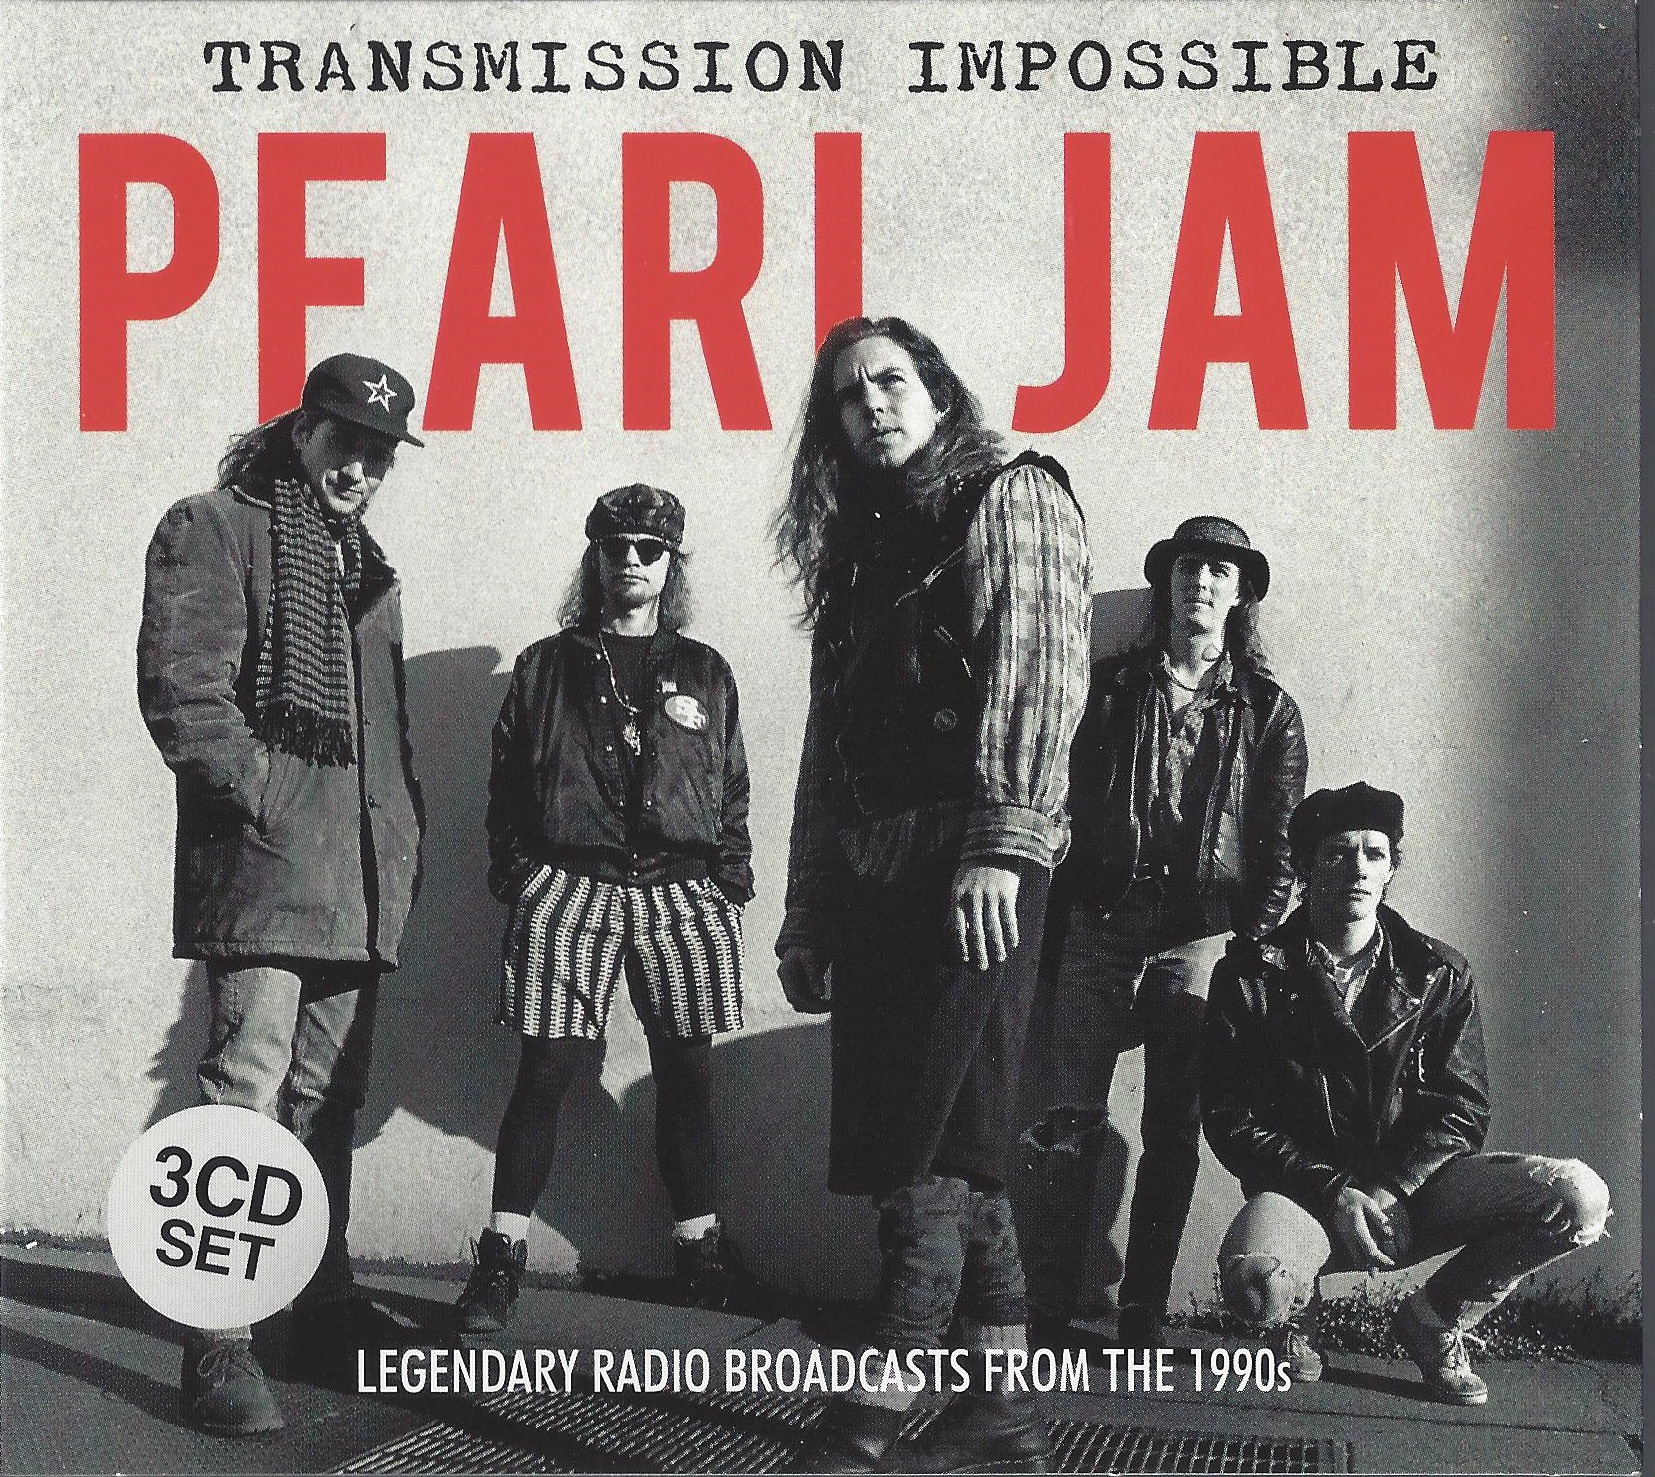 Pearl jam слушать. Pearl Jam. Перл джем группа. Pearl Jam фото. Pearl Jam гранж.